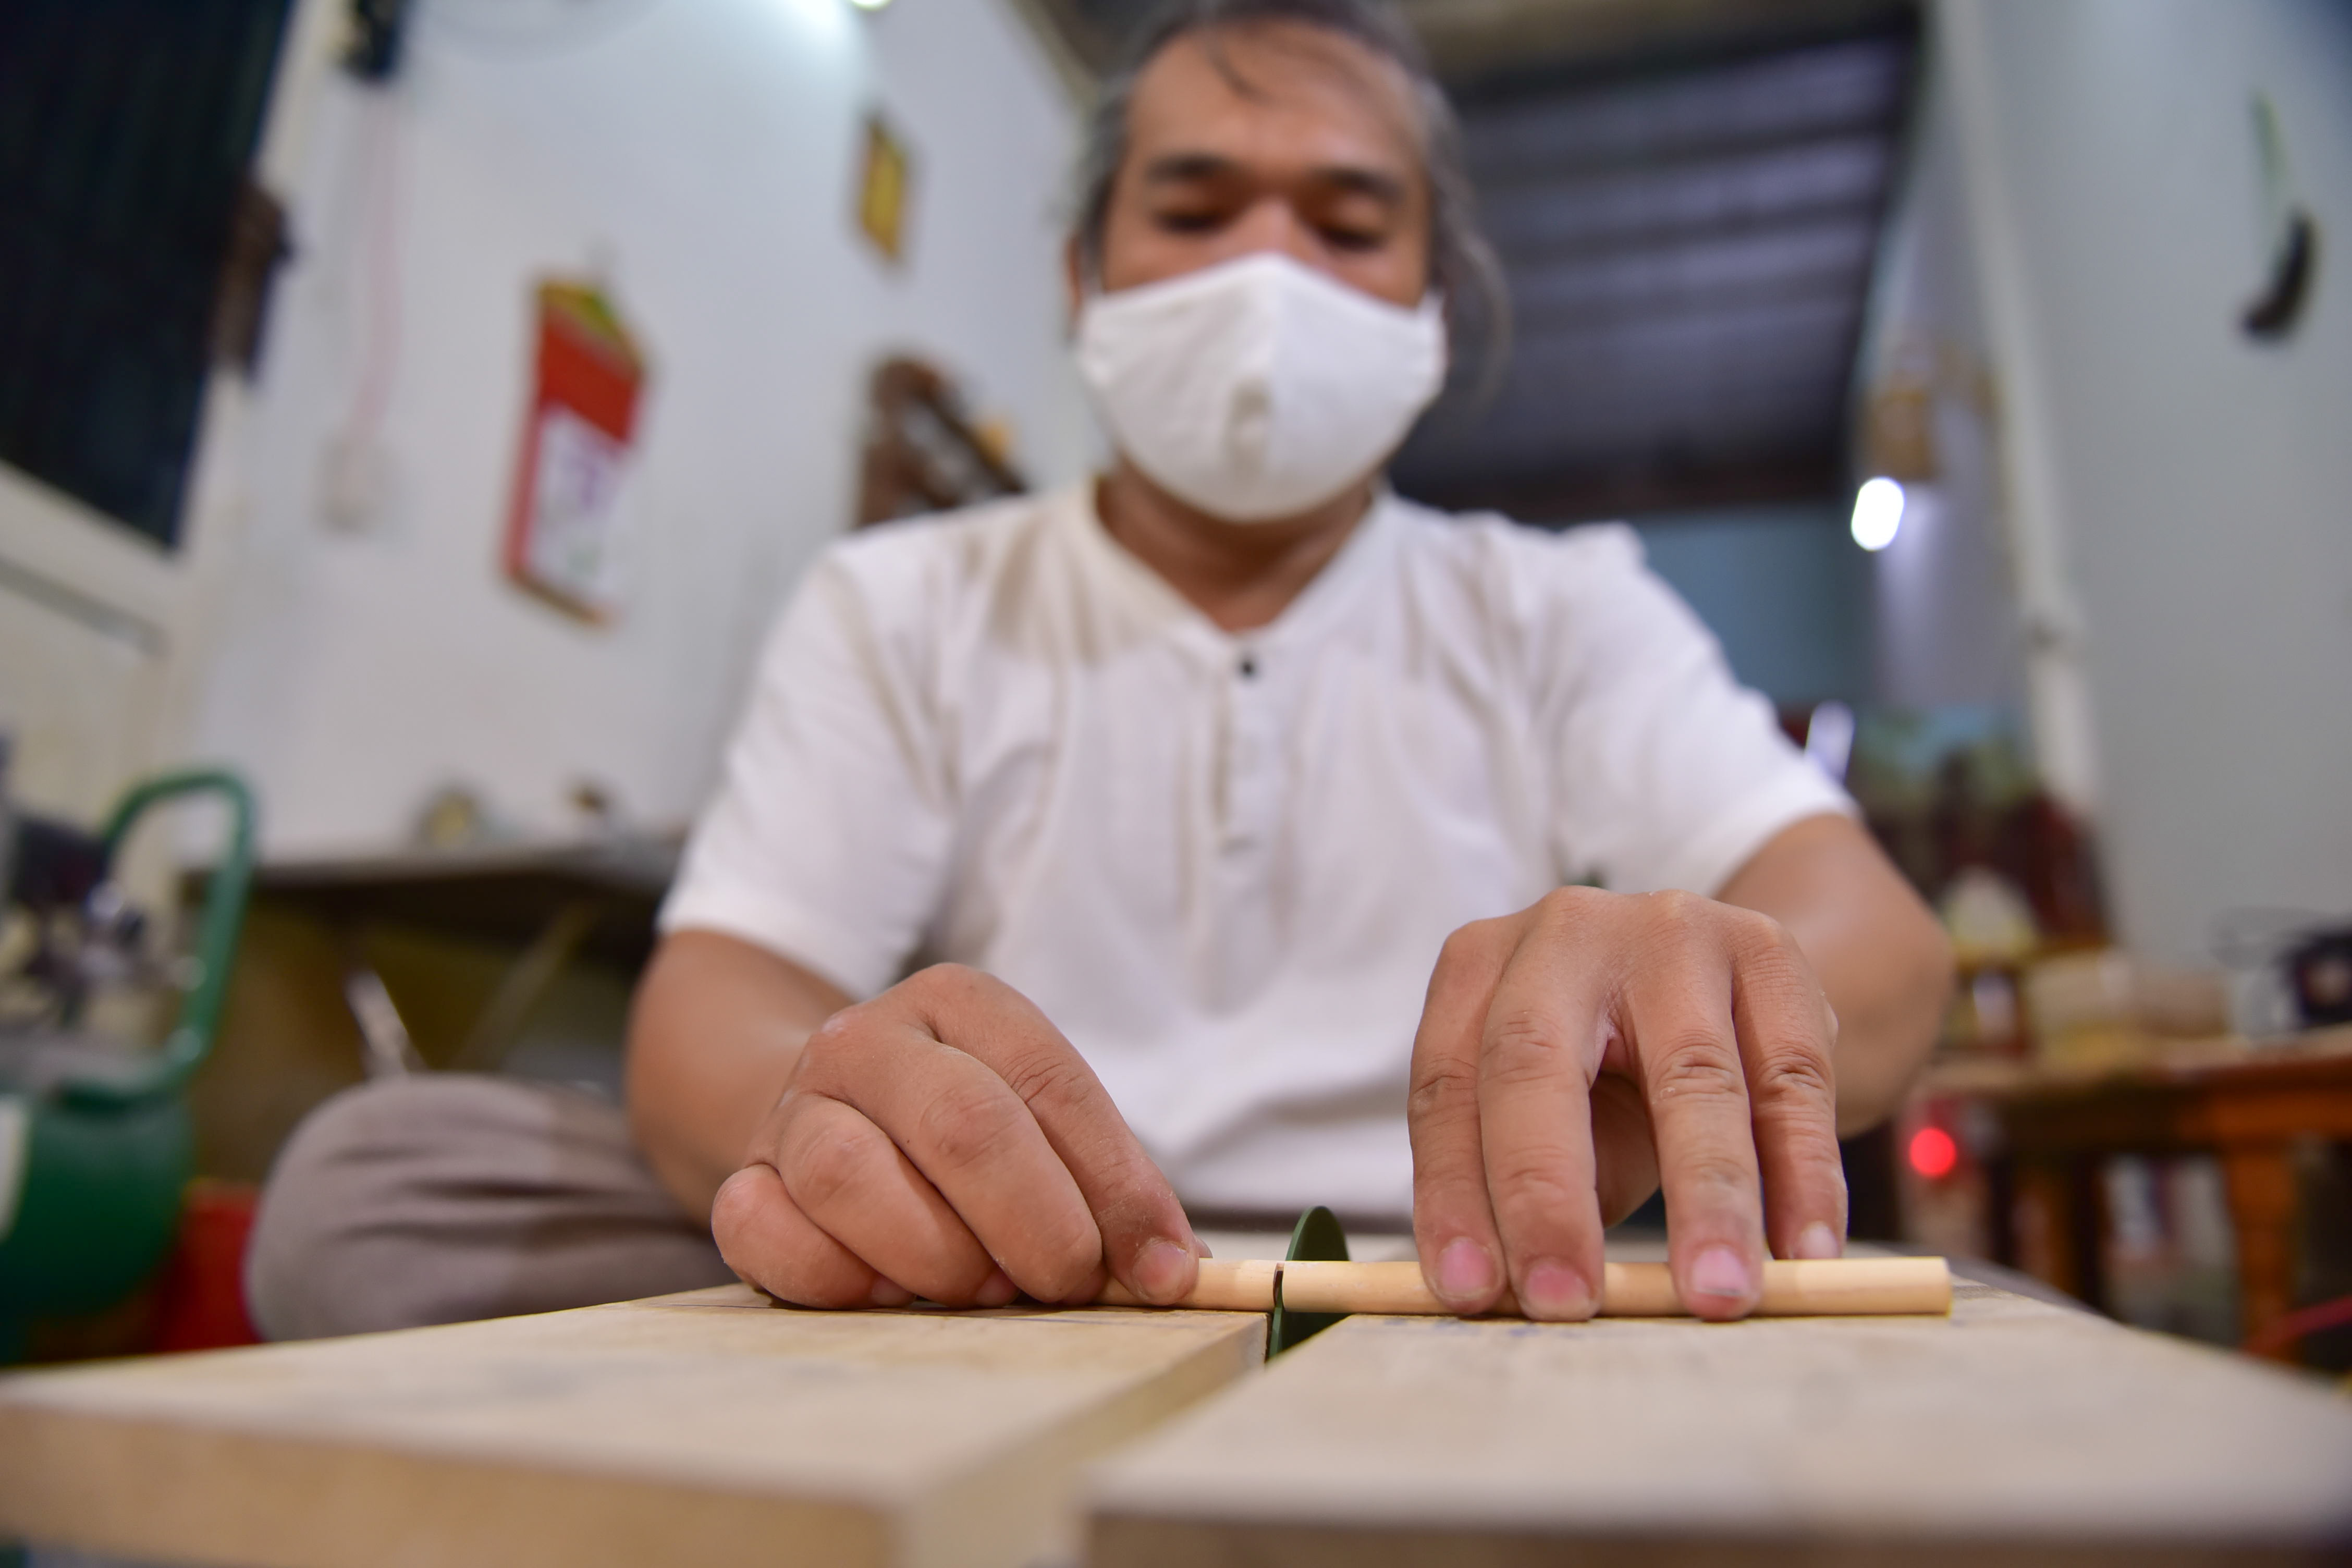 Phan works on bamboo straws to make pen barrels. Photo: Ngoc Phuong / Tuoi Tre News